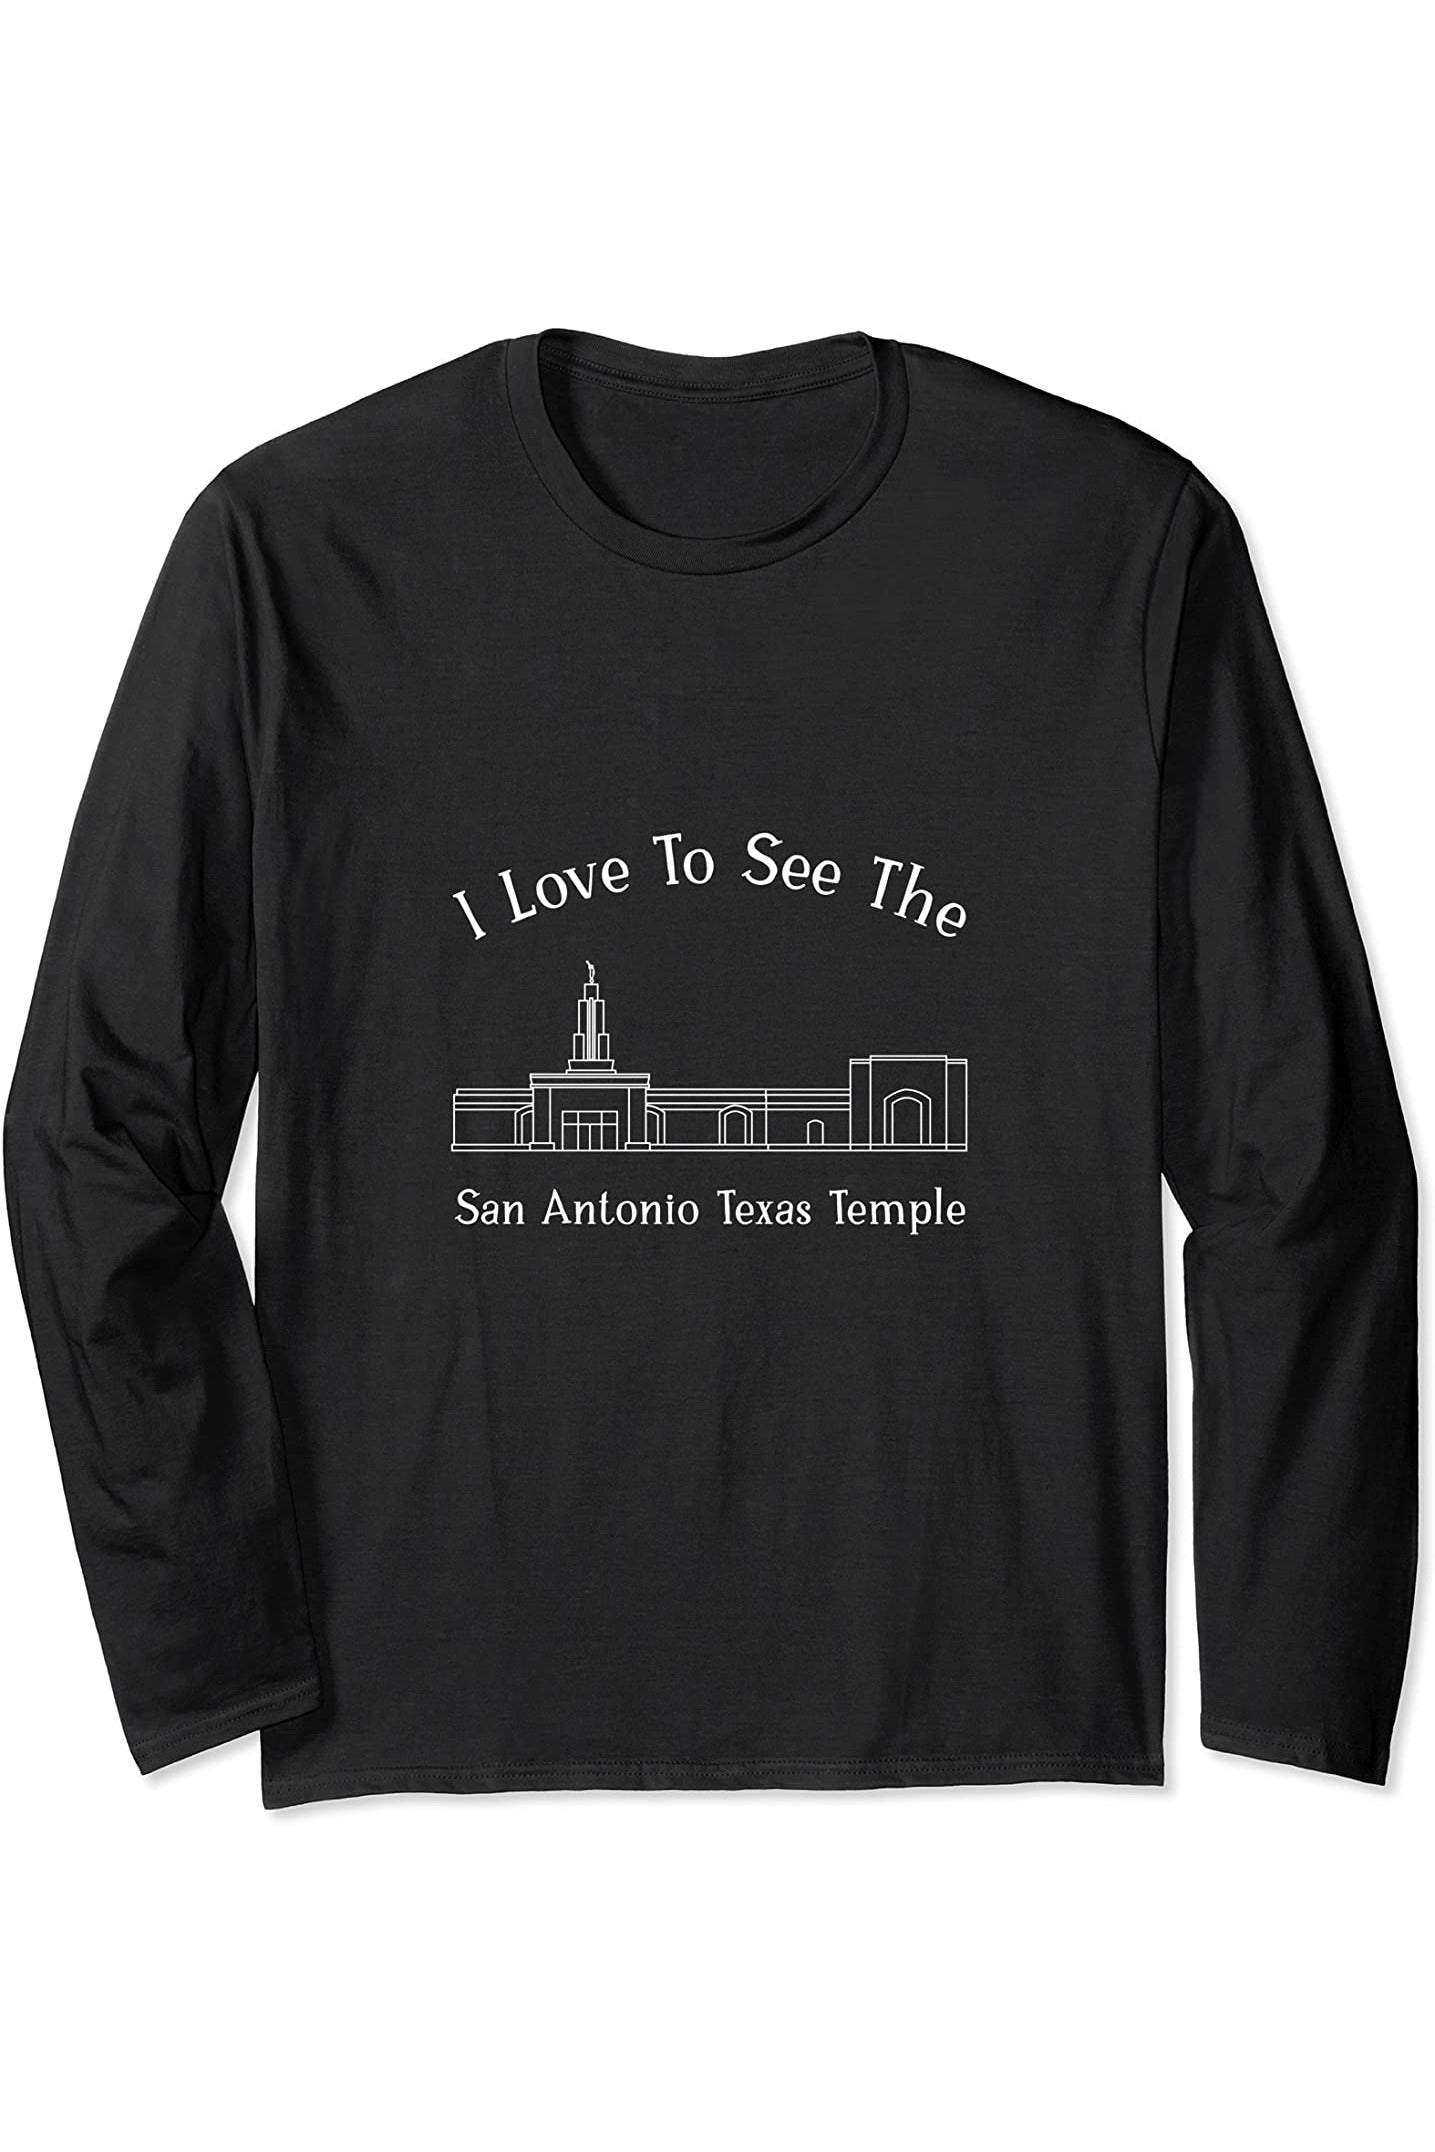 San Antonio Texas Temple Long Sleeve T-Shirt - Happy Style (English) US